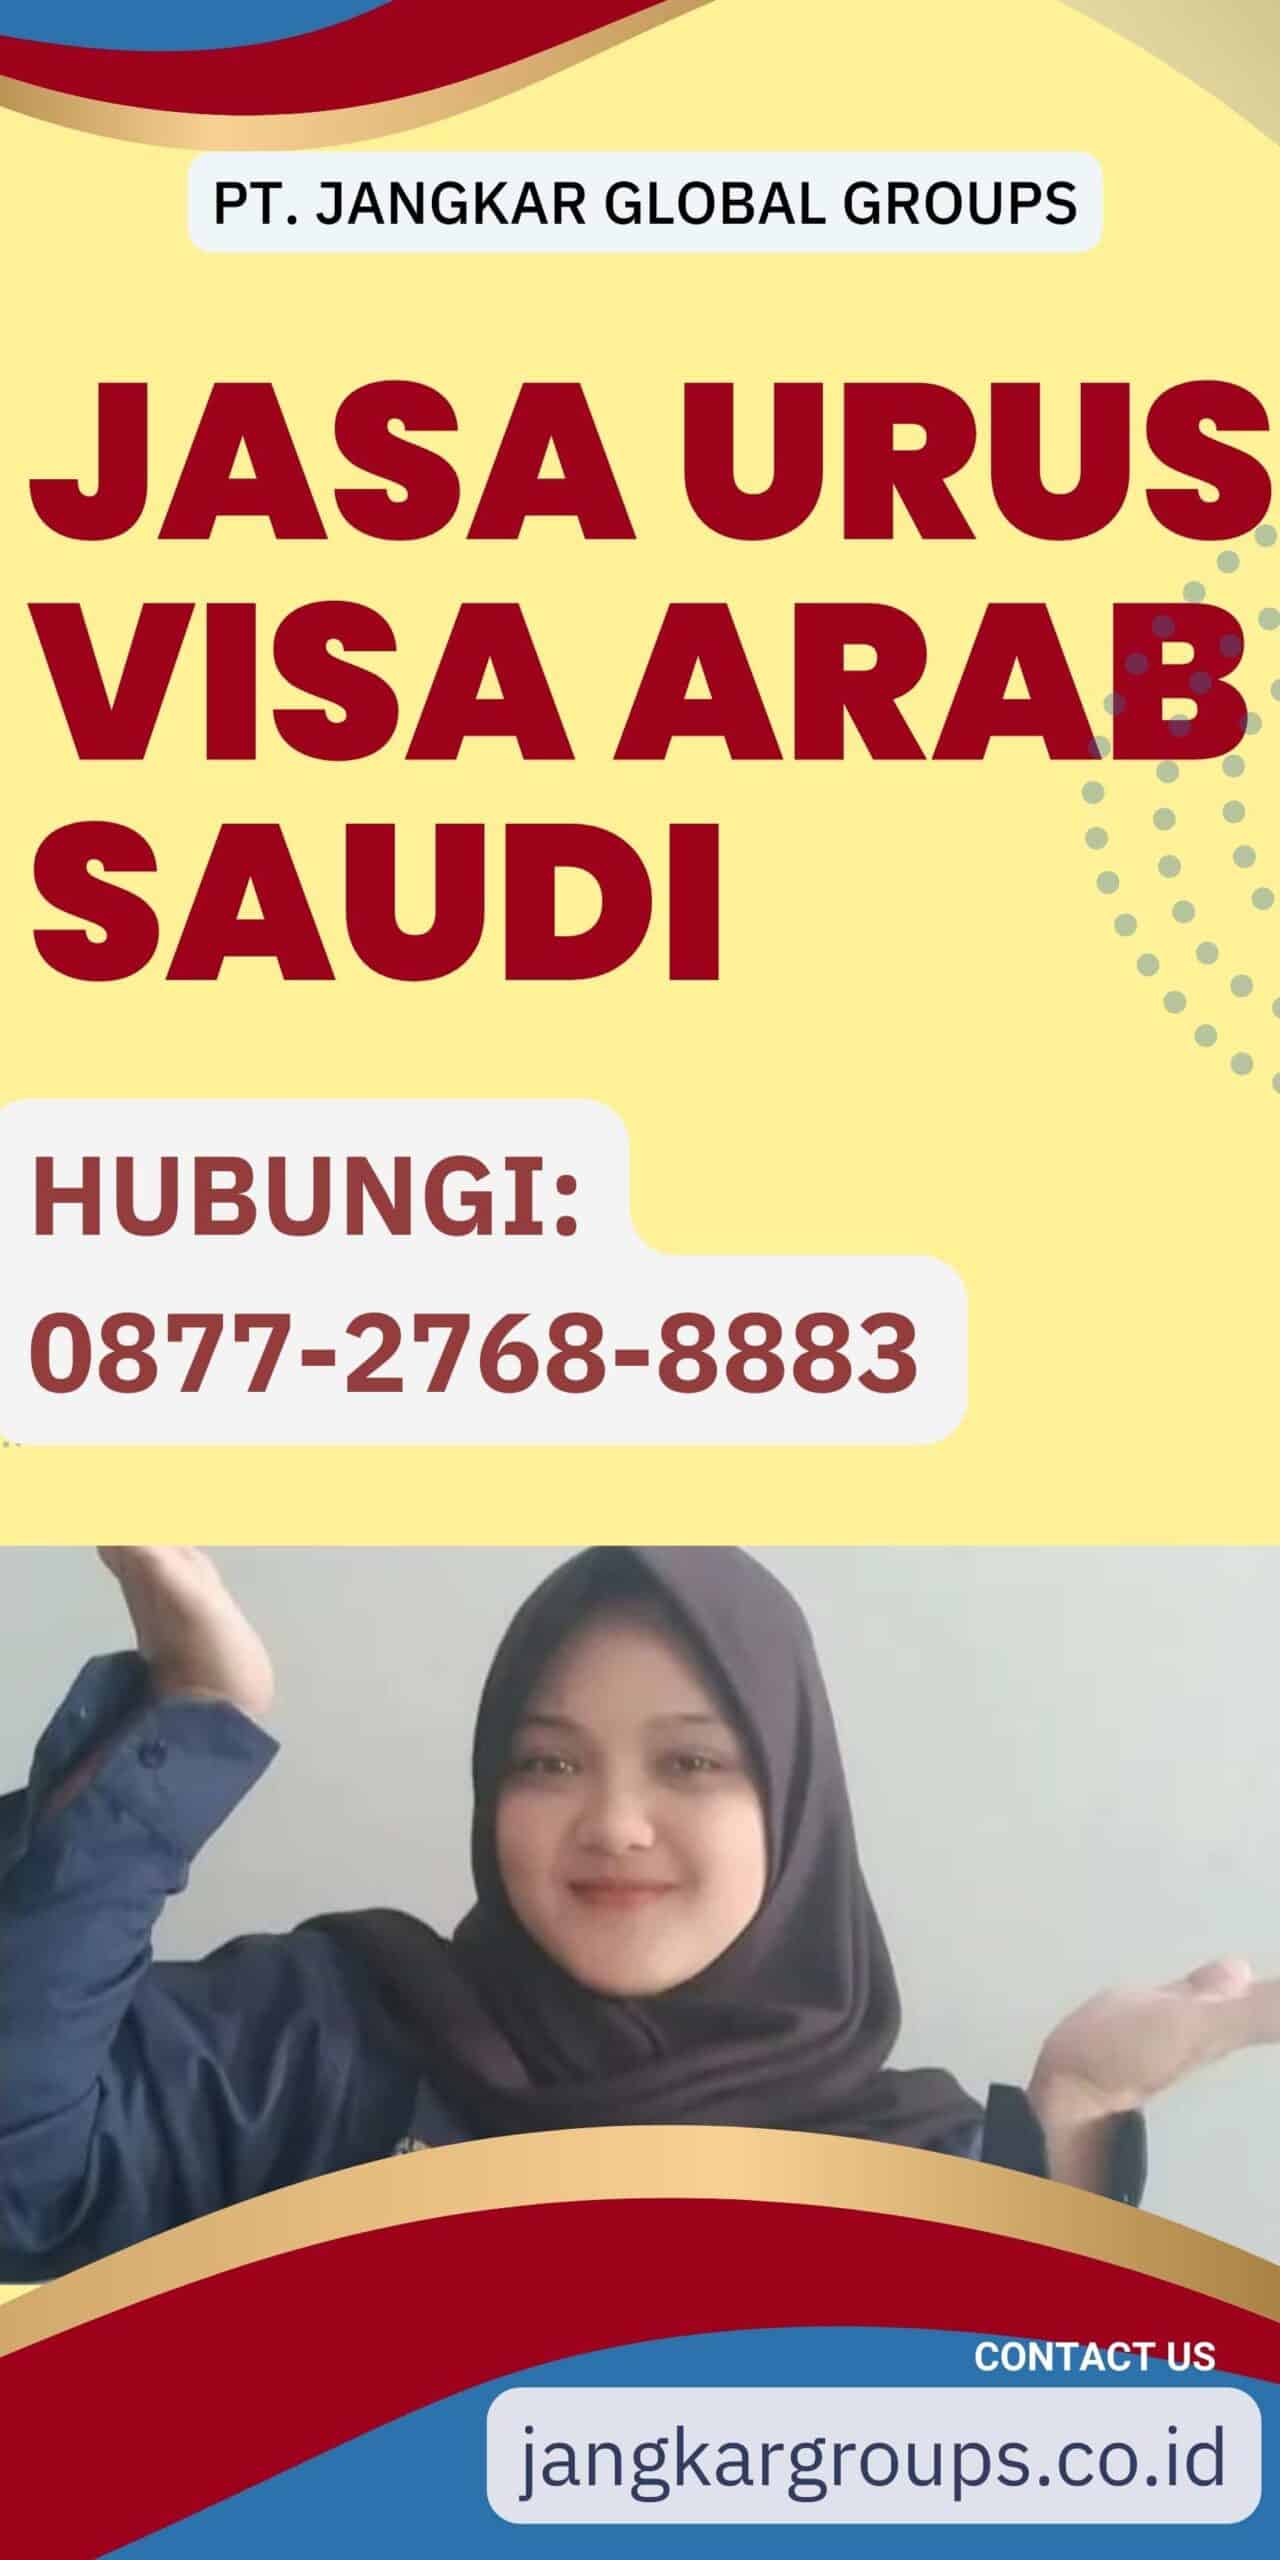 Jasa Urus Visa Arab Saudi